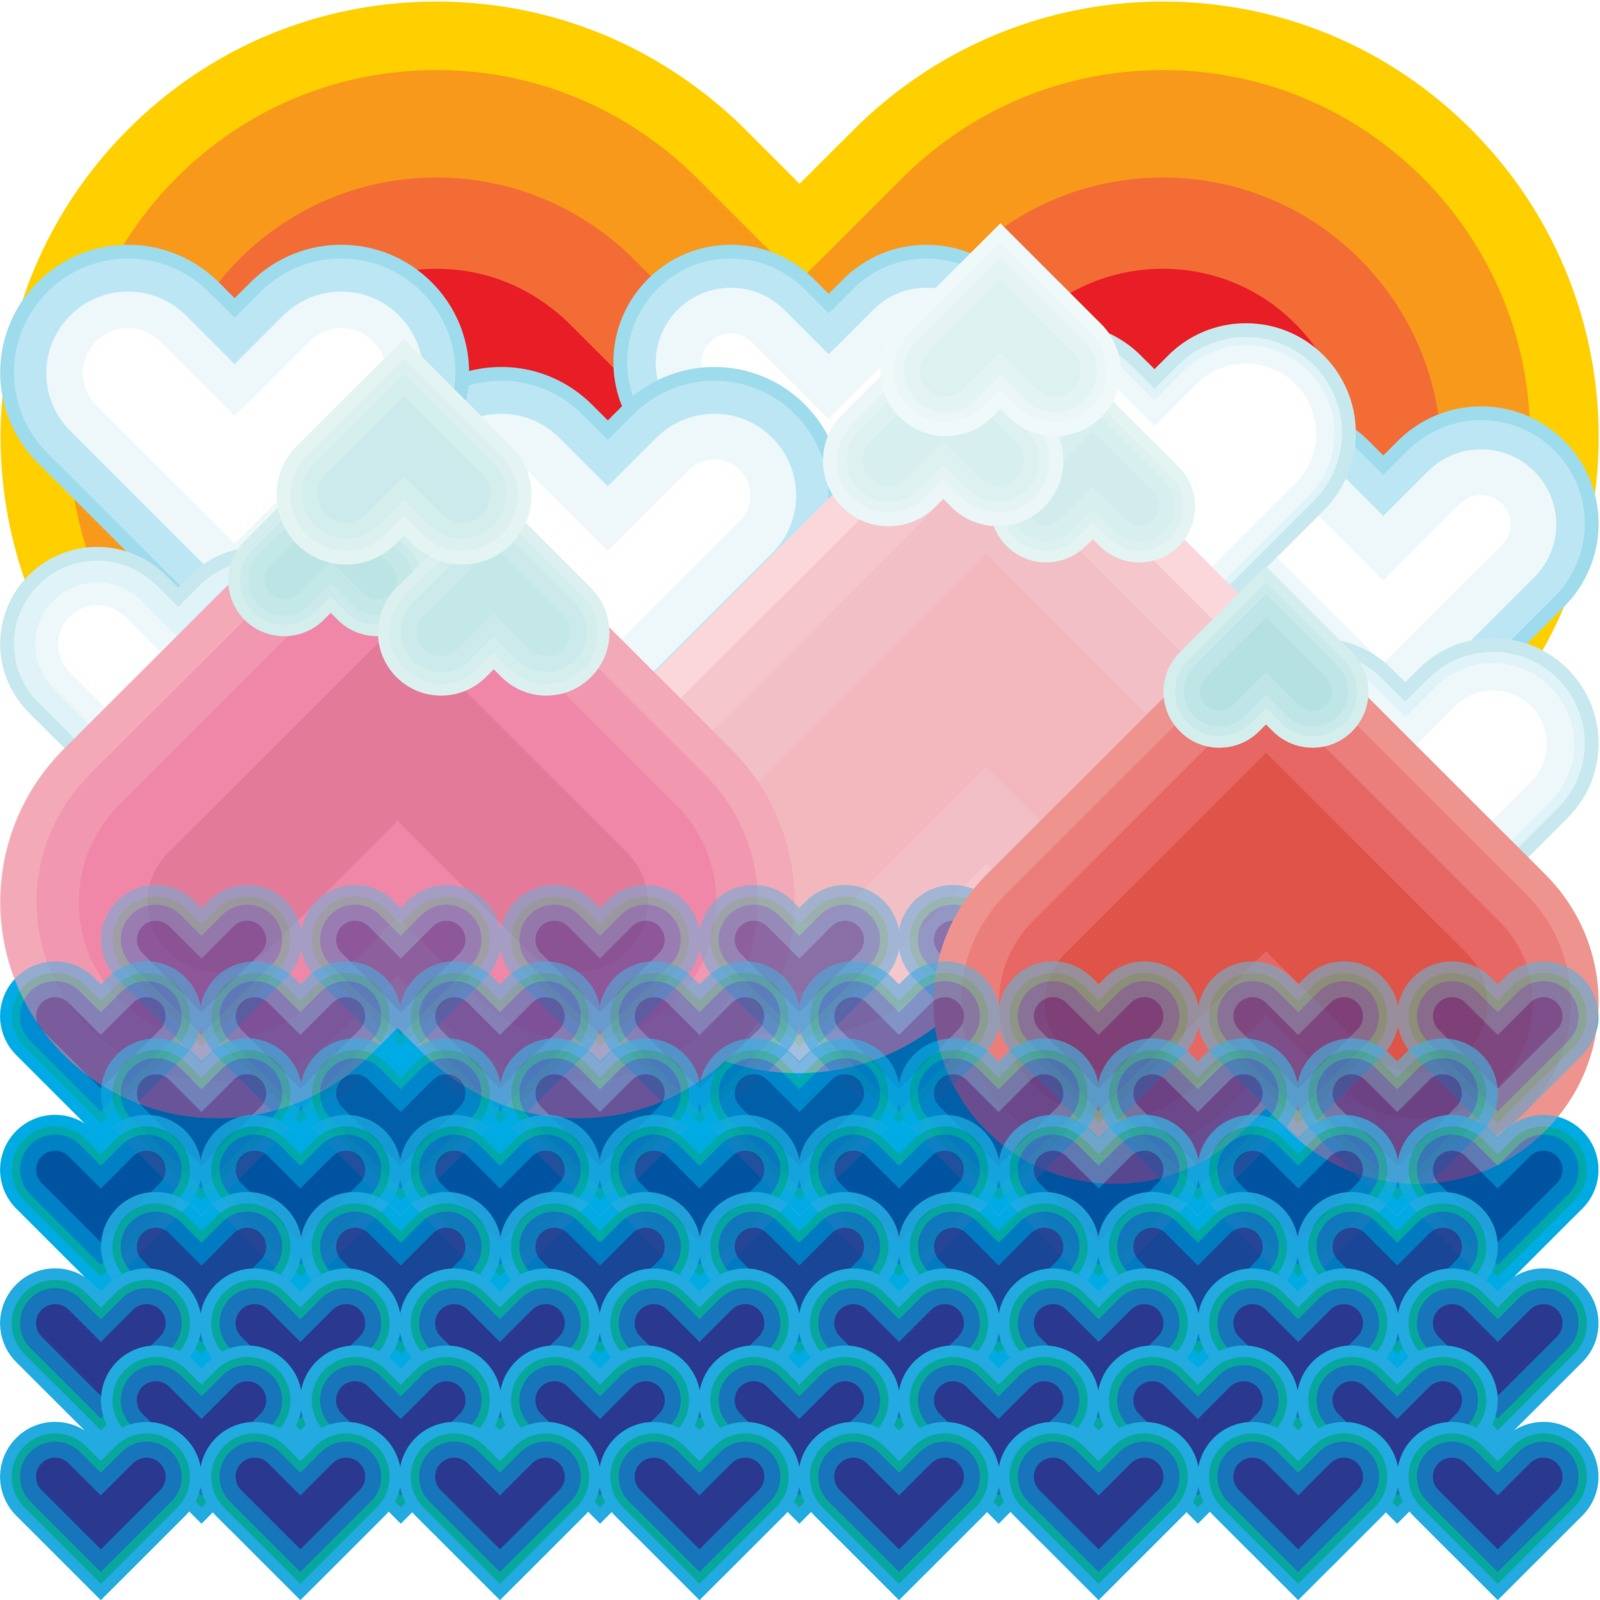 Seascape heart illustrate vector color.